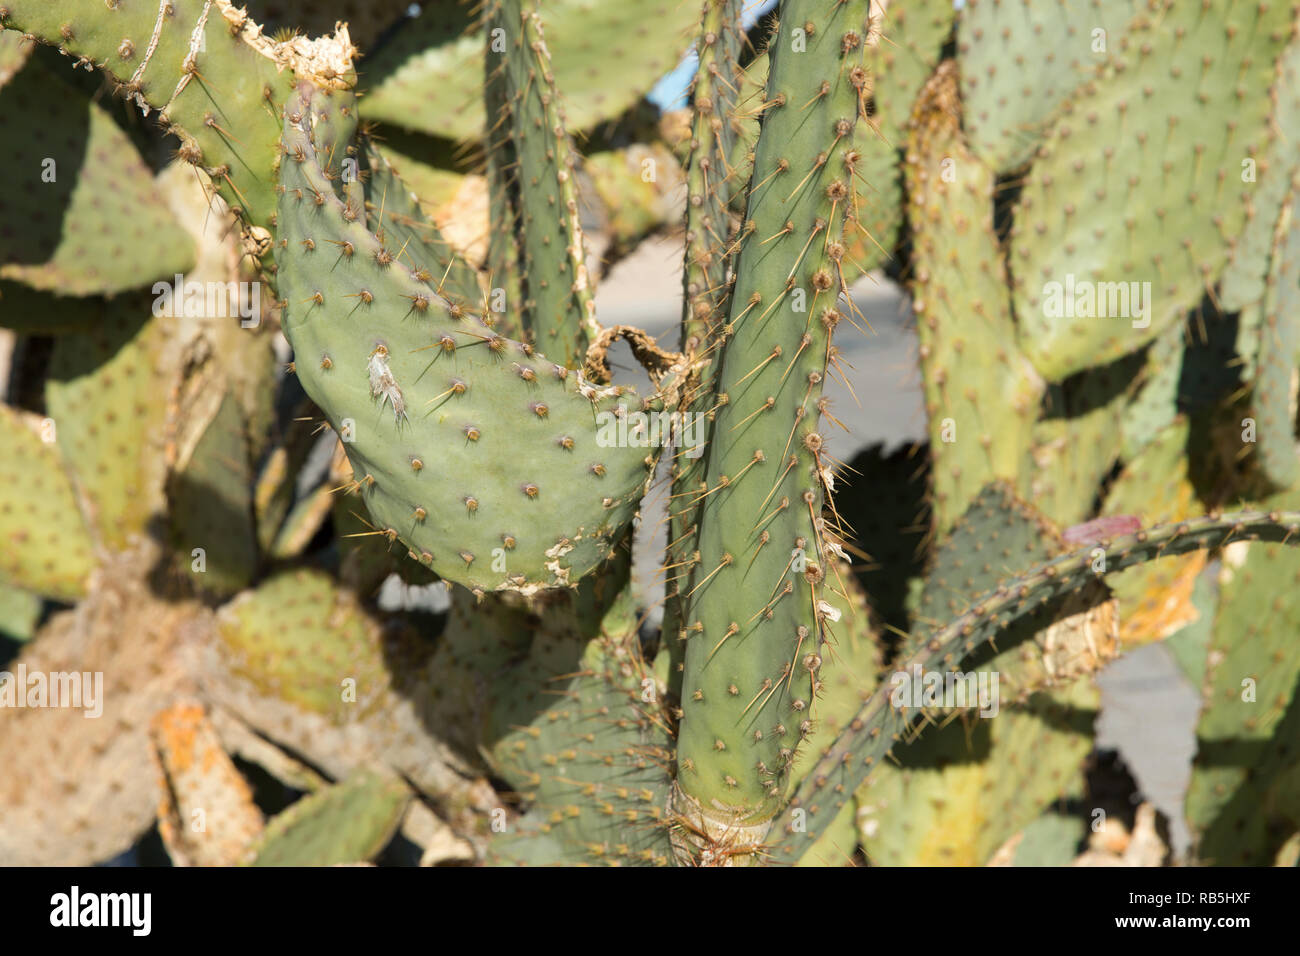 close up of cactus growing outdoors Stock Photo